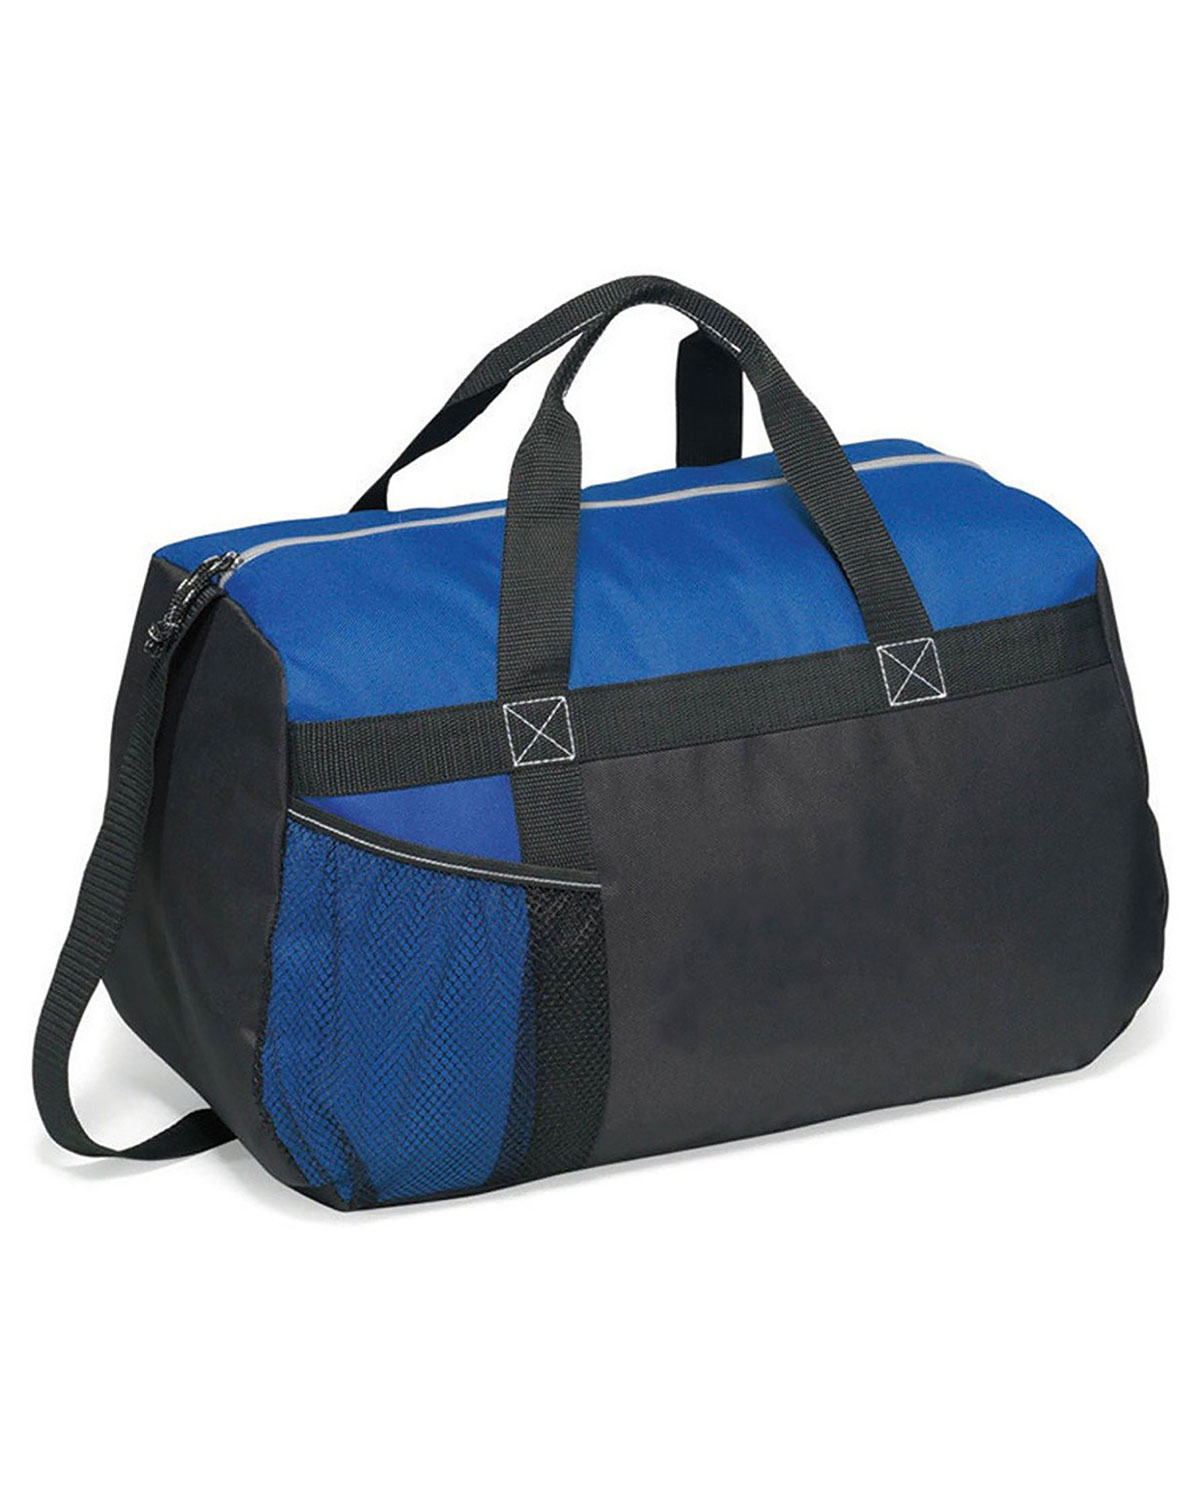 Gemline G7001 Unisex Sequel Sport Bag at Apparelstation